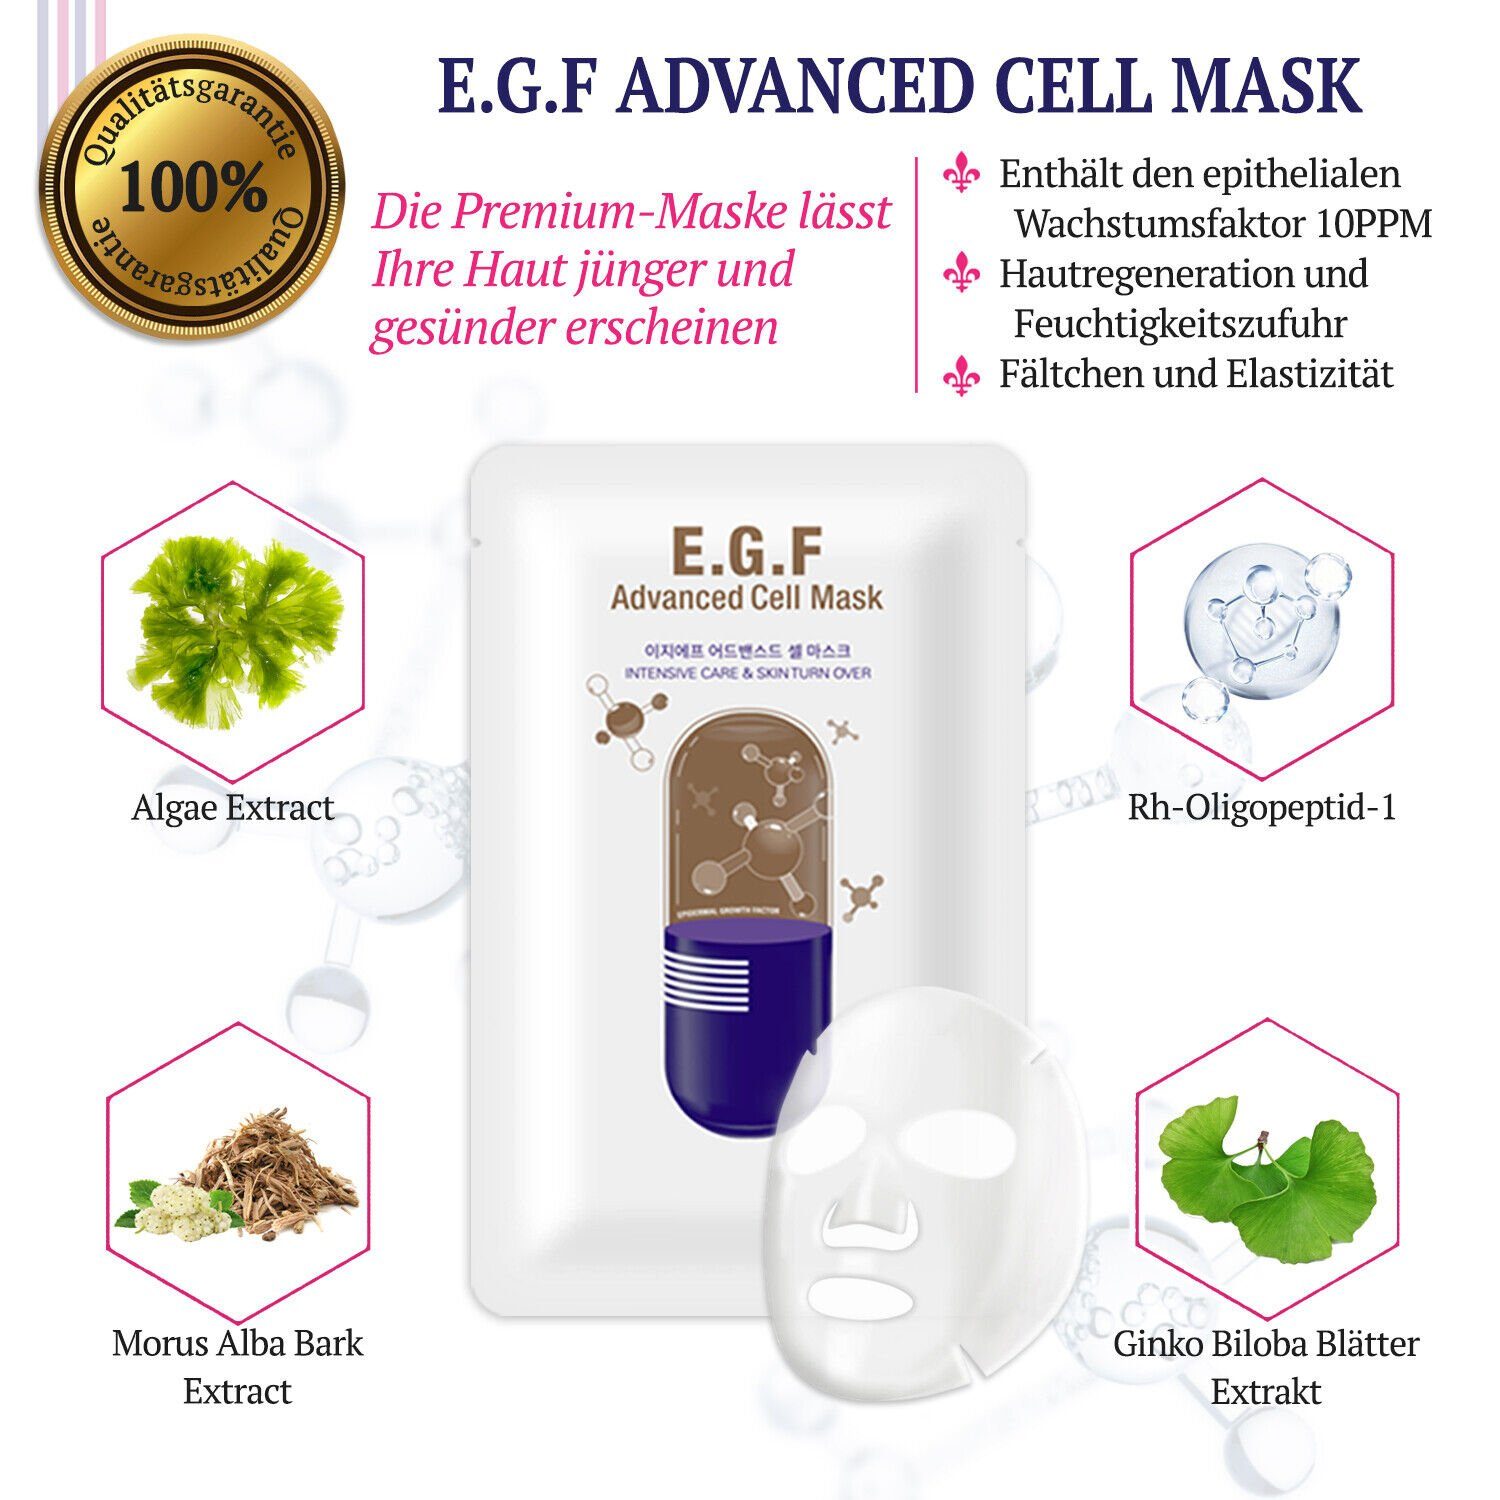 Advanced Korea Storyderm Gesichtsmaske E.G.F 1-tlg. Premium NEUHEIT Cell, aus Storyderm Tuchmaske Pflege Gesichtsmaske